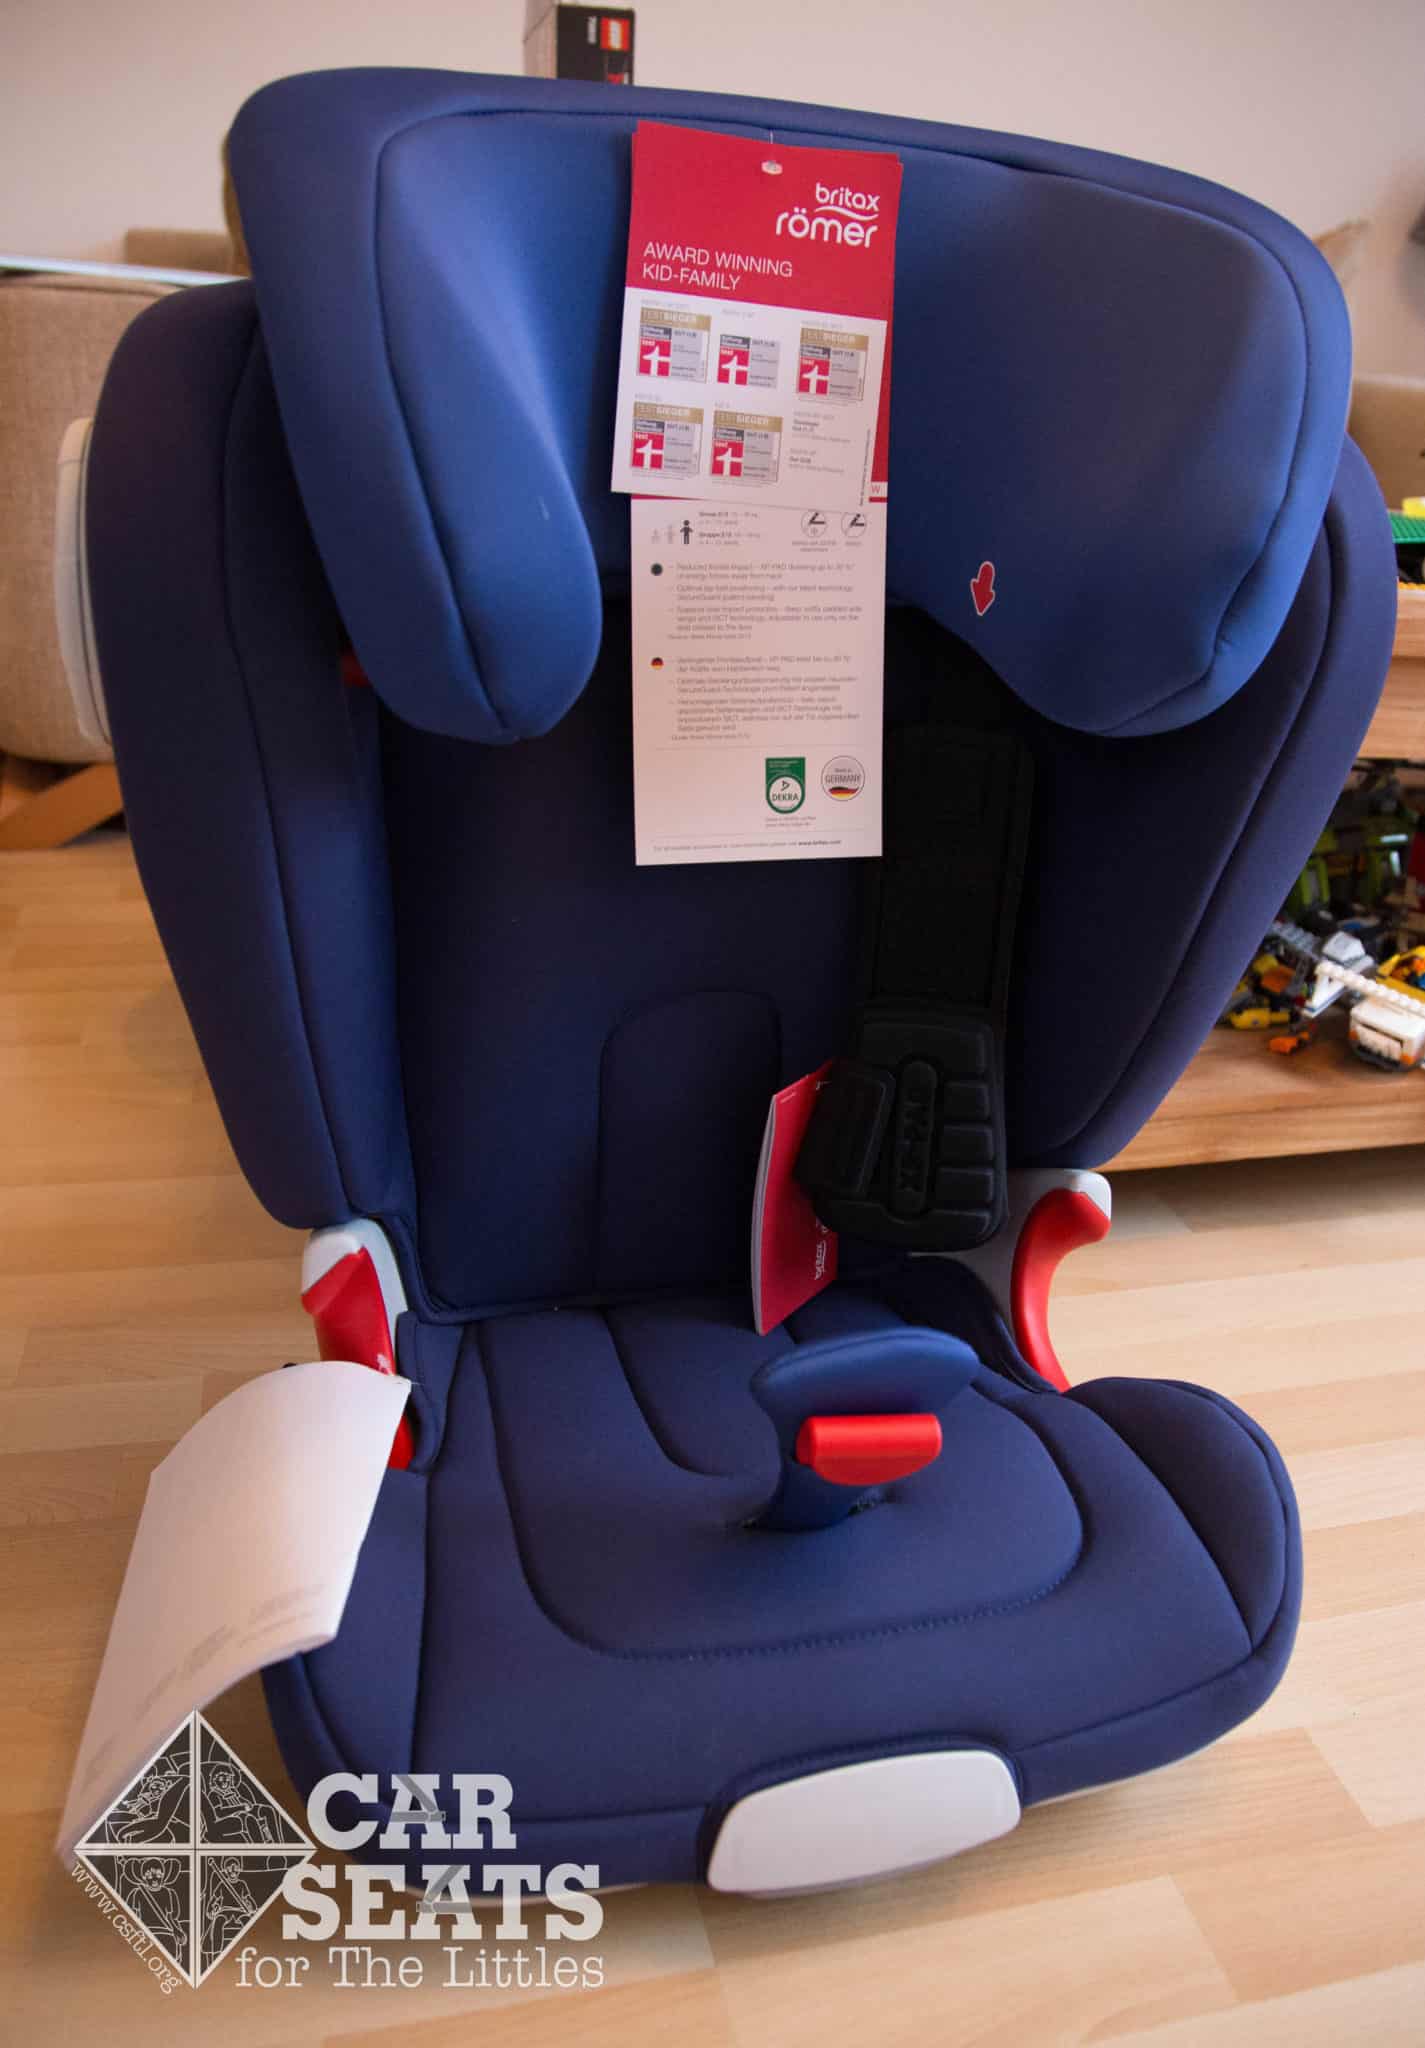 Britax Römer KIDFIX 2 S Car Seat - Reviews